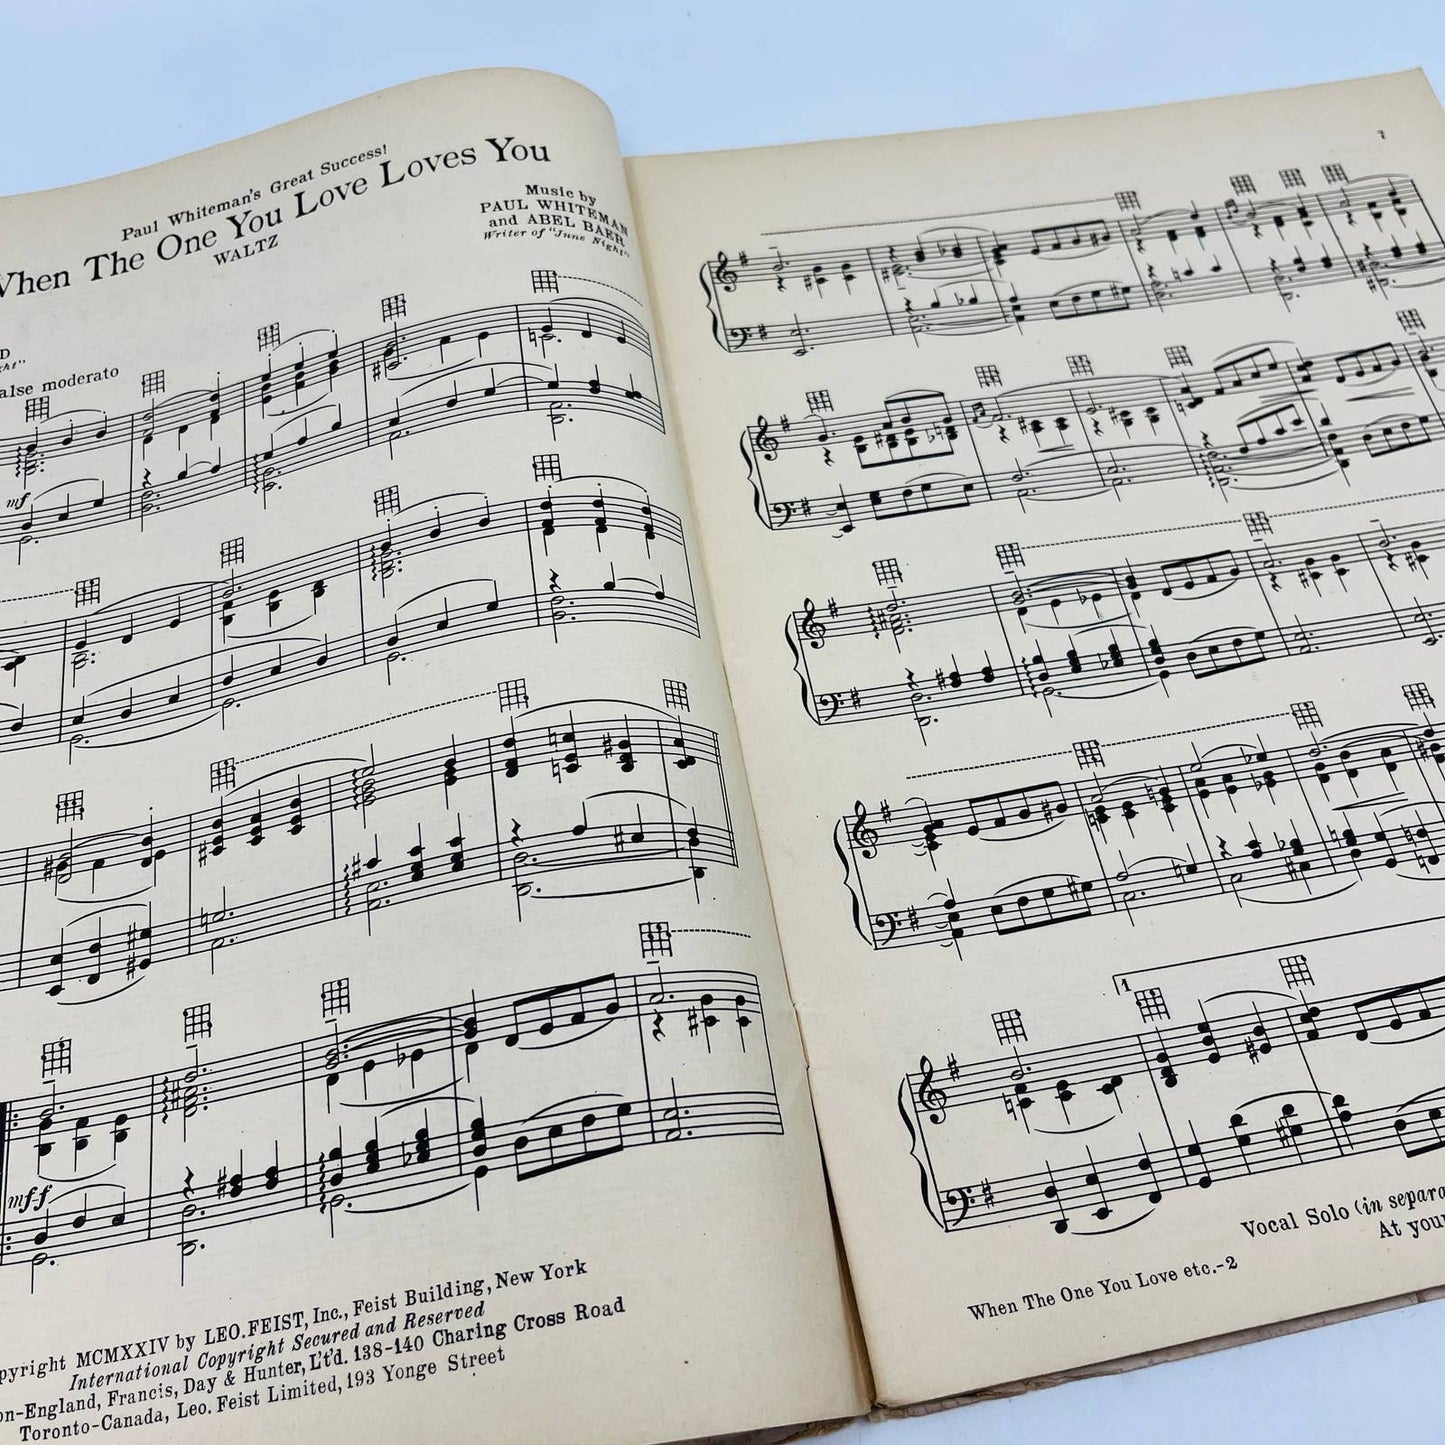 1924 Feist Dance Folio No. 9 - 30 Dance Hits for Piano Sheet Music TA6